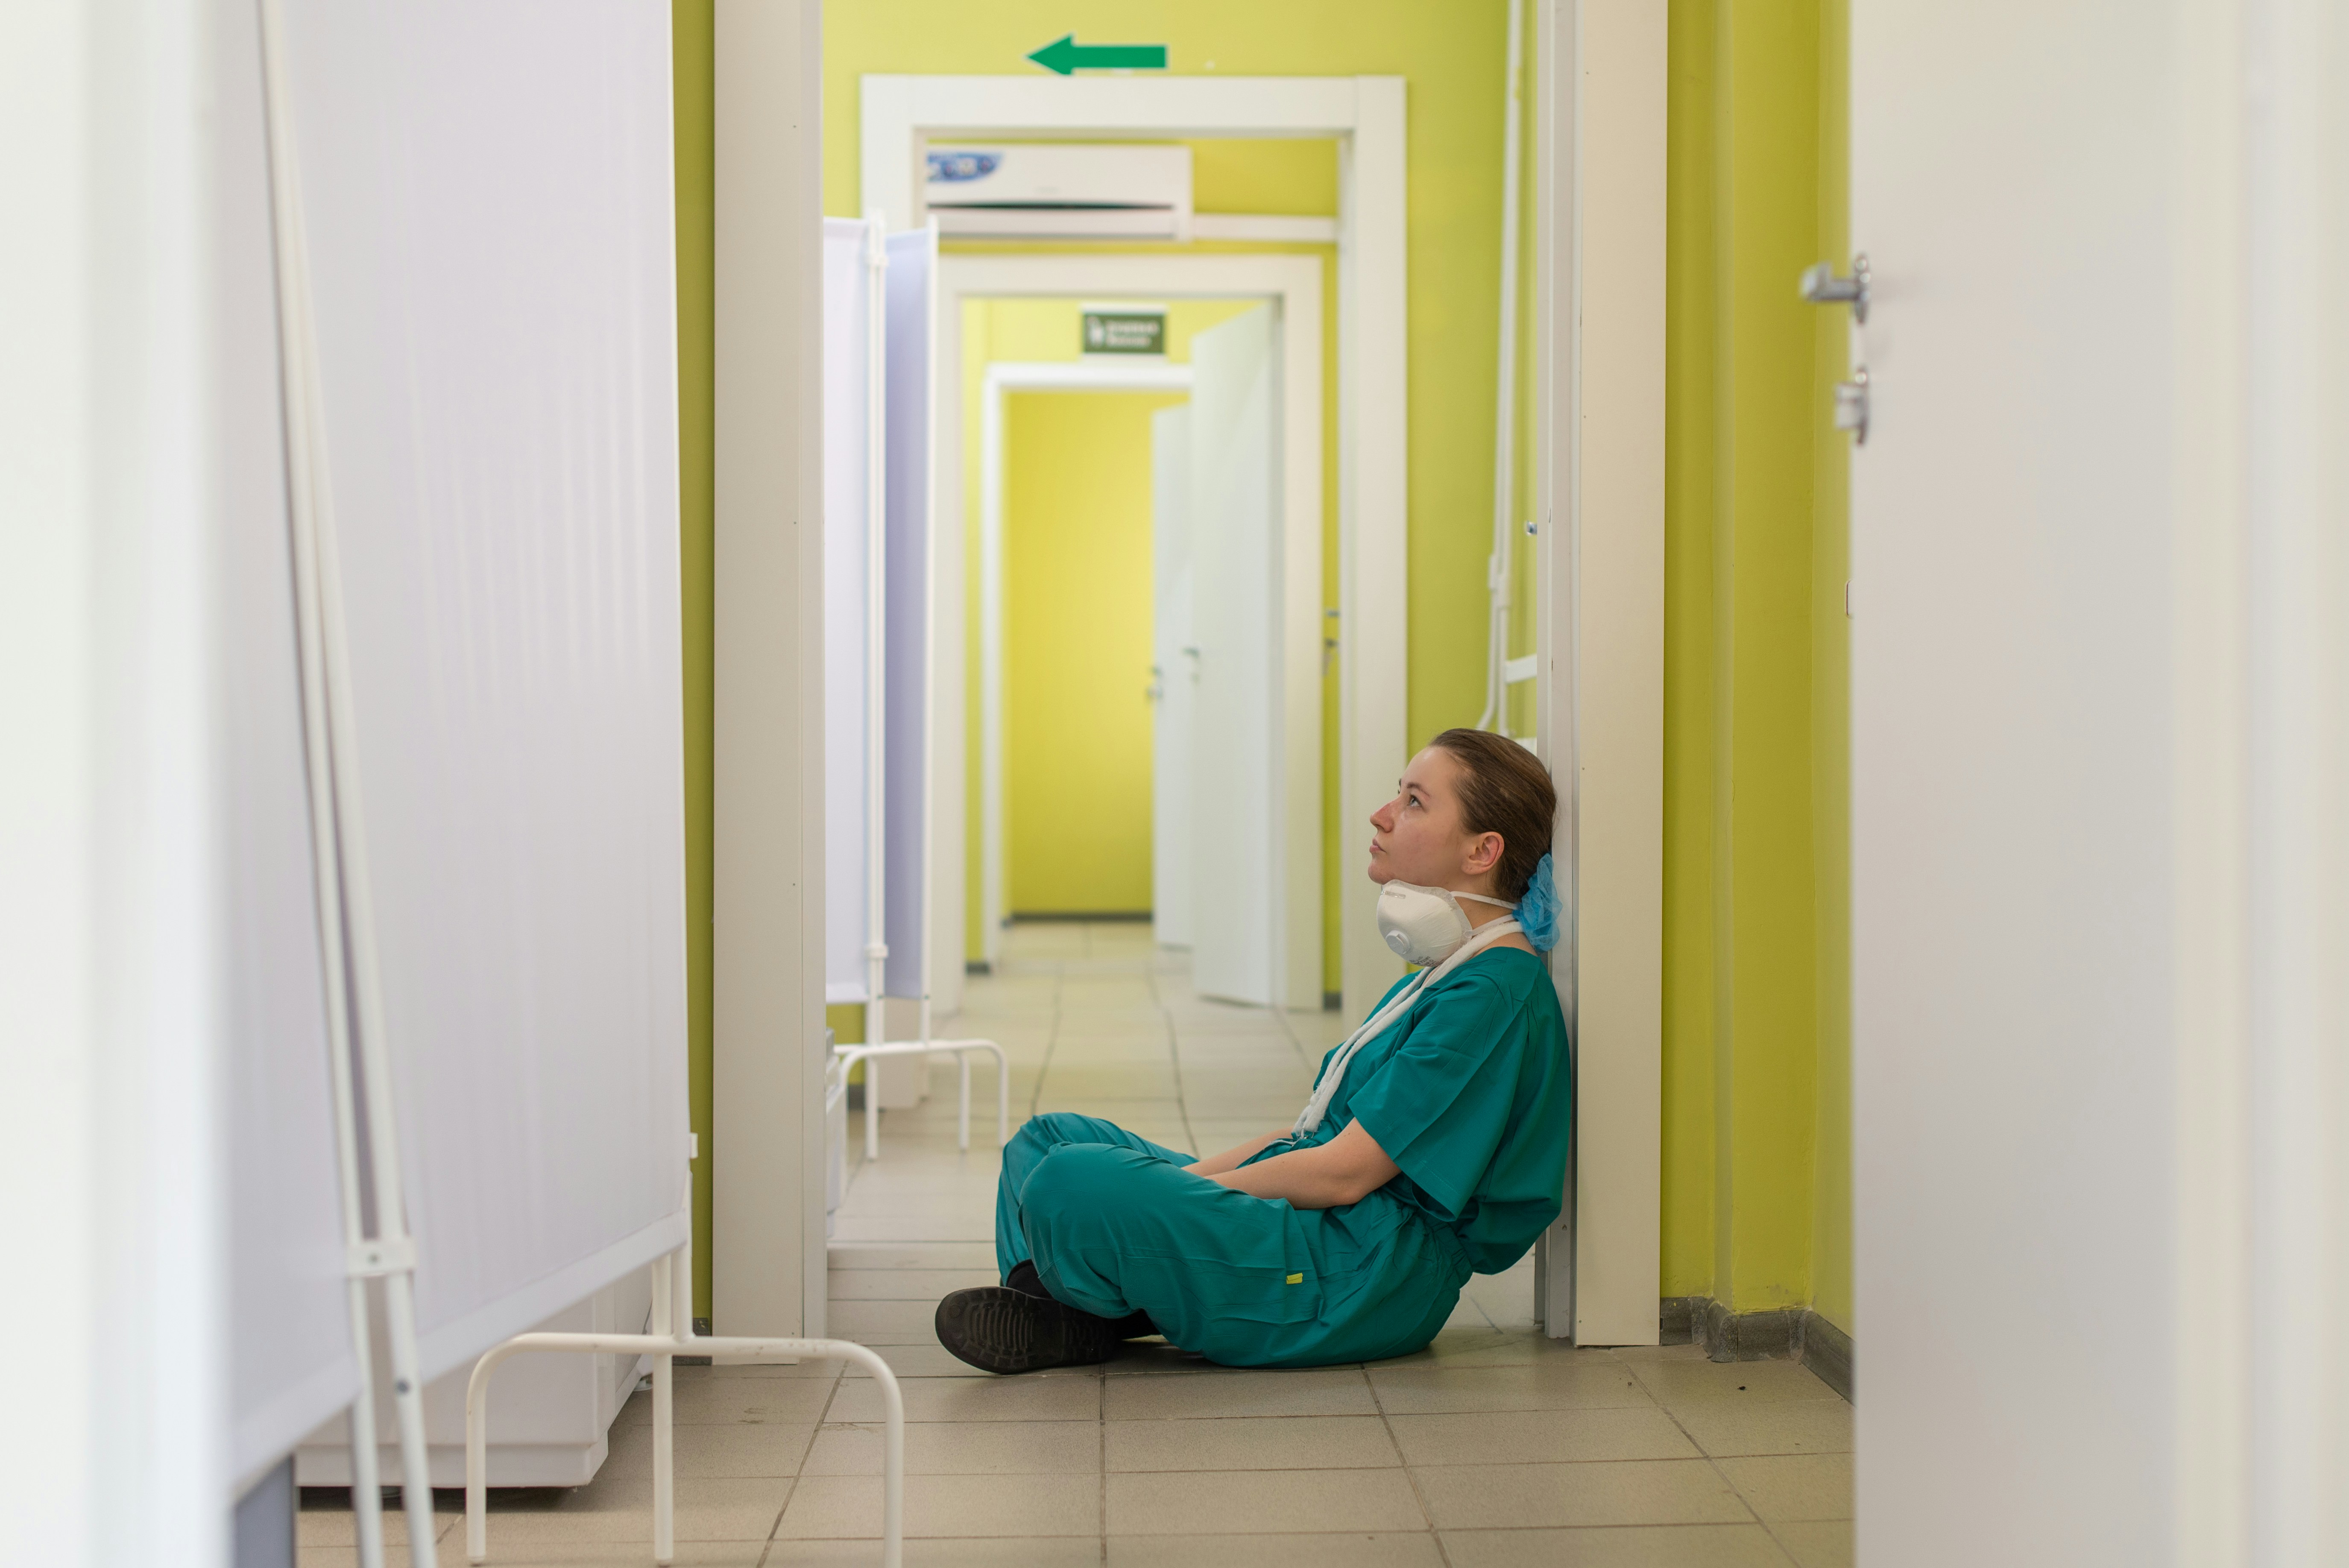 護理人員需要被鼓勵和關心。(Photo by Vladimir Fedotov on Unsplash)